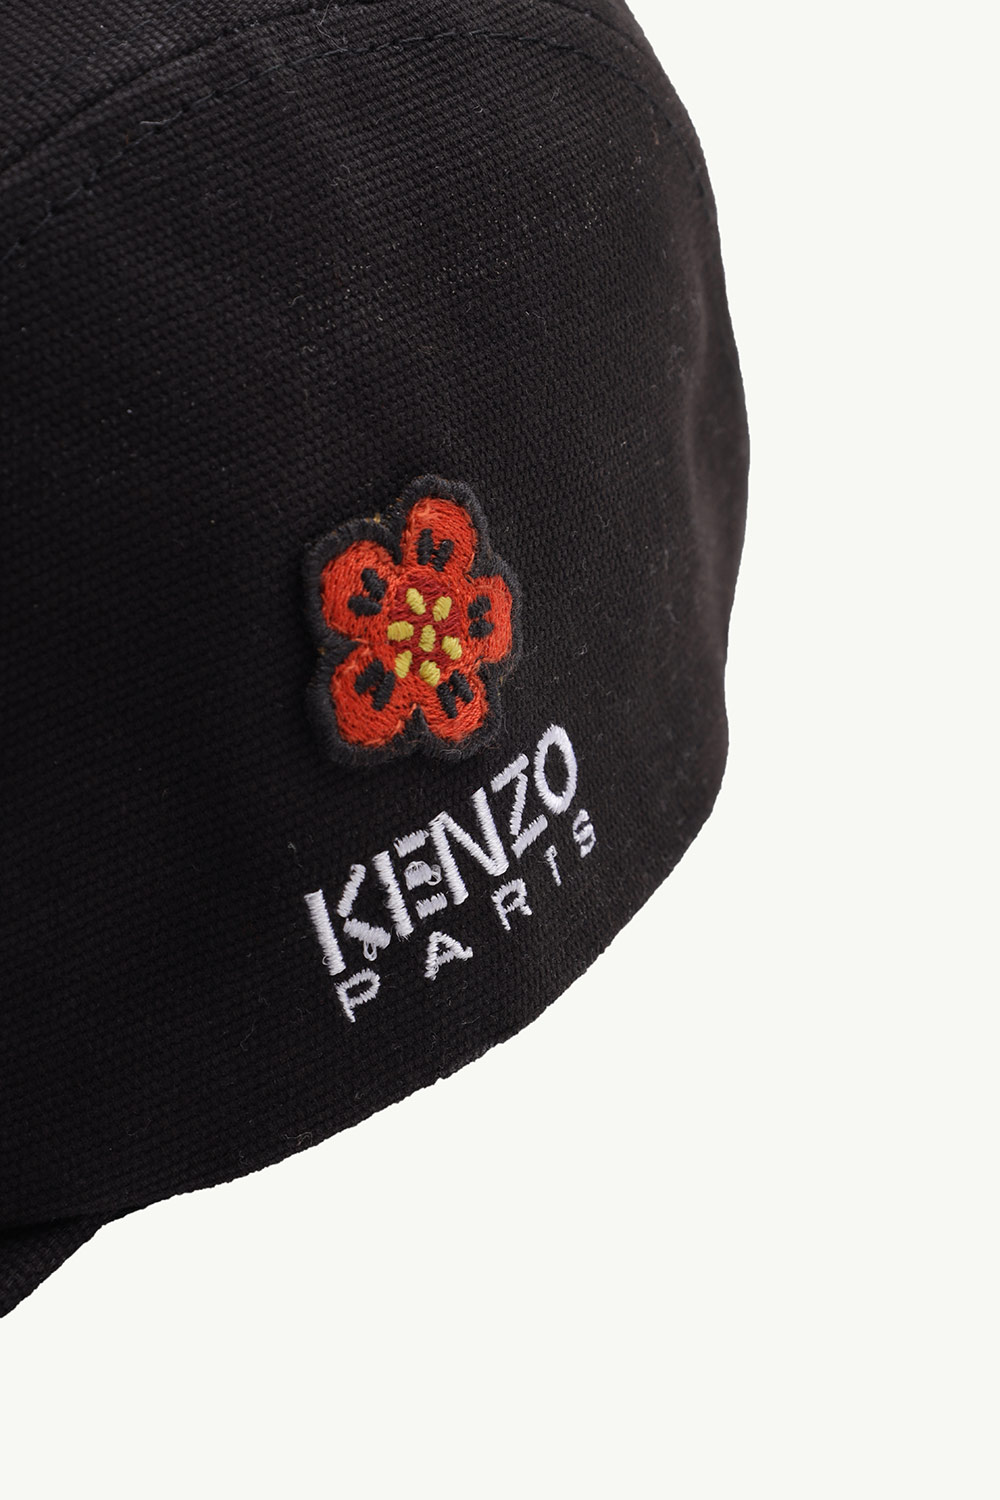 KENZO Boke Flower Crest Baseball Cap in Black 3